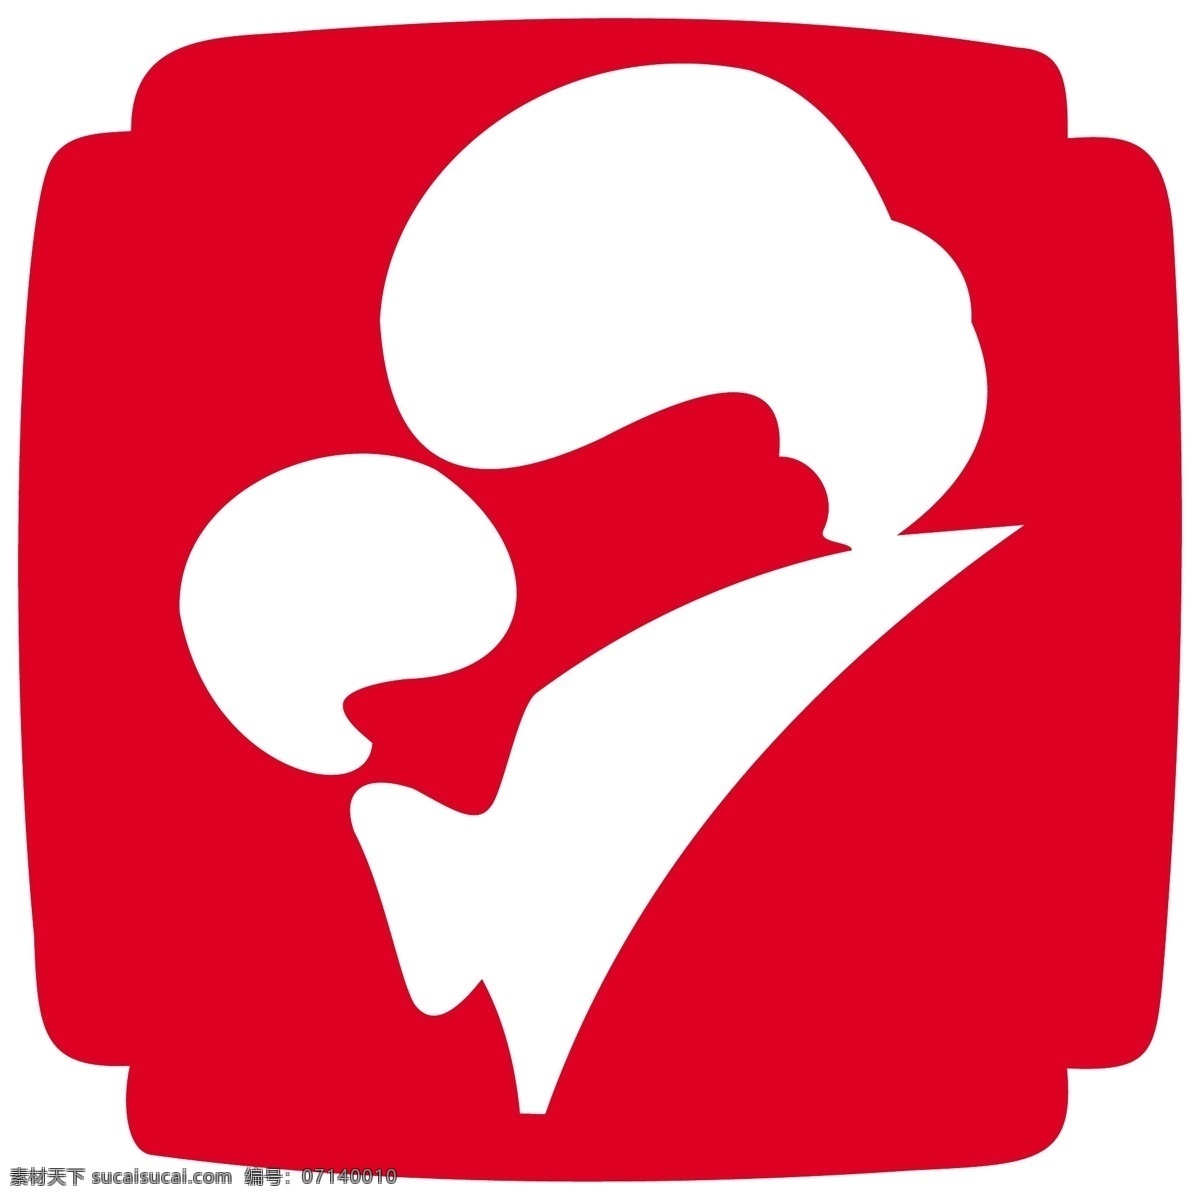 logo 标识 标识标志图标 标志 儿童 公共标识标志 儿童保健 矢量 模板下载 保健标识 psd源文件 logo设计